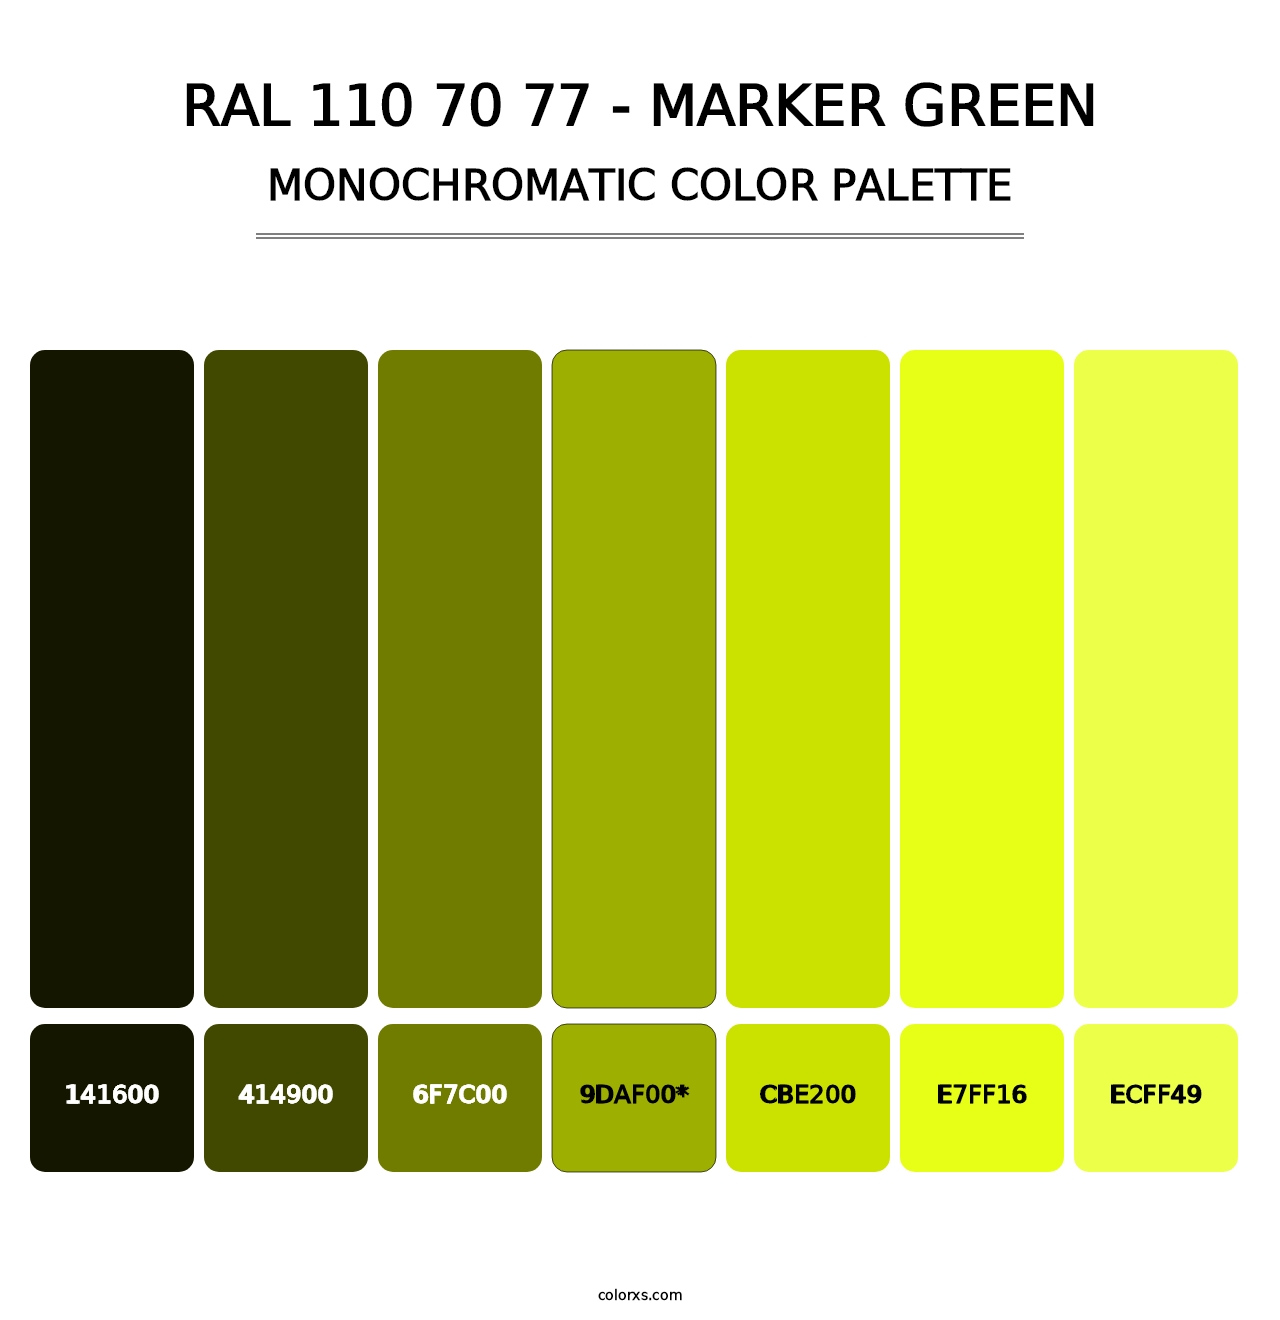 RAL 110 70 77 - Marker Green - Monochromatic Color Palette